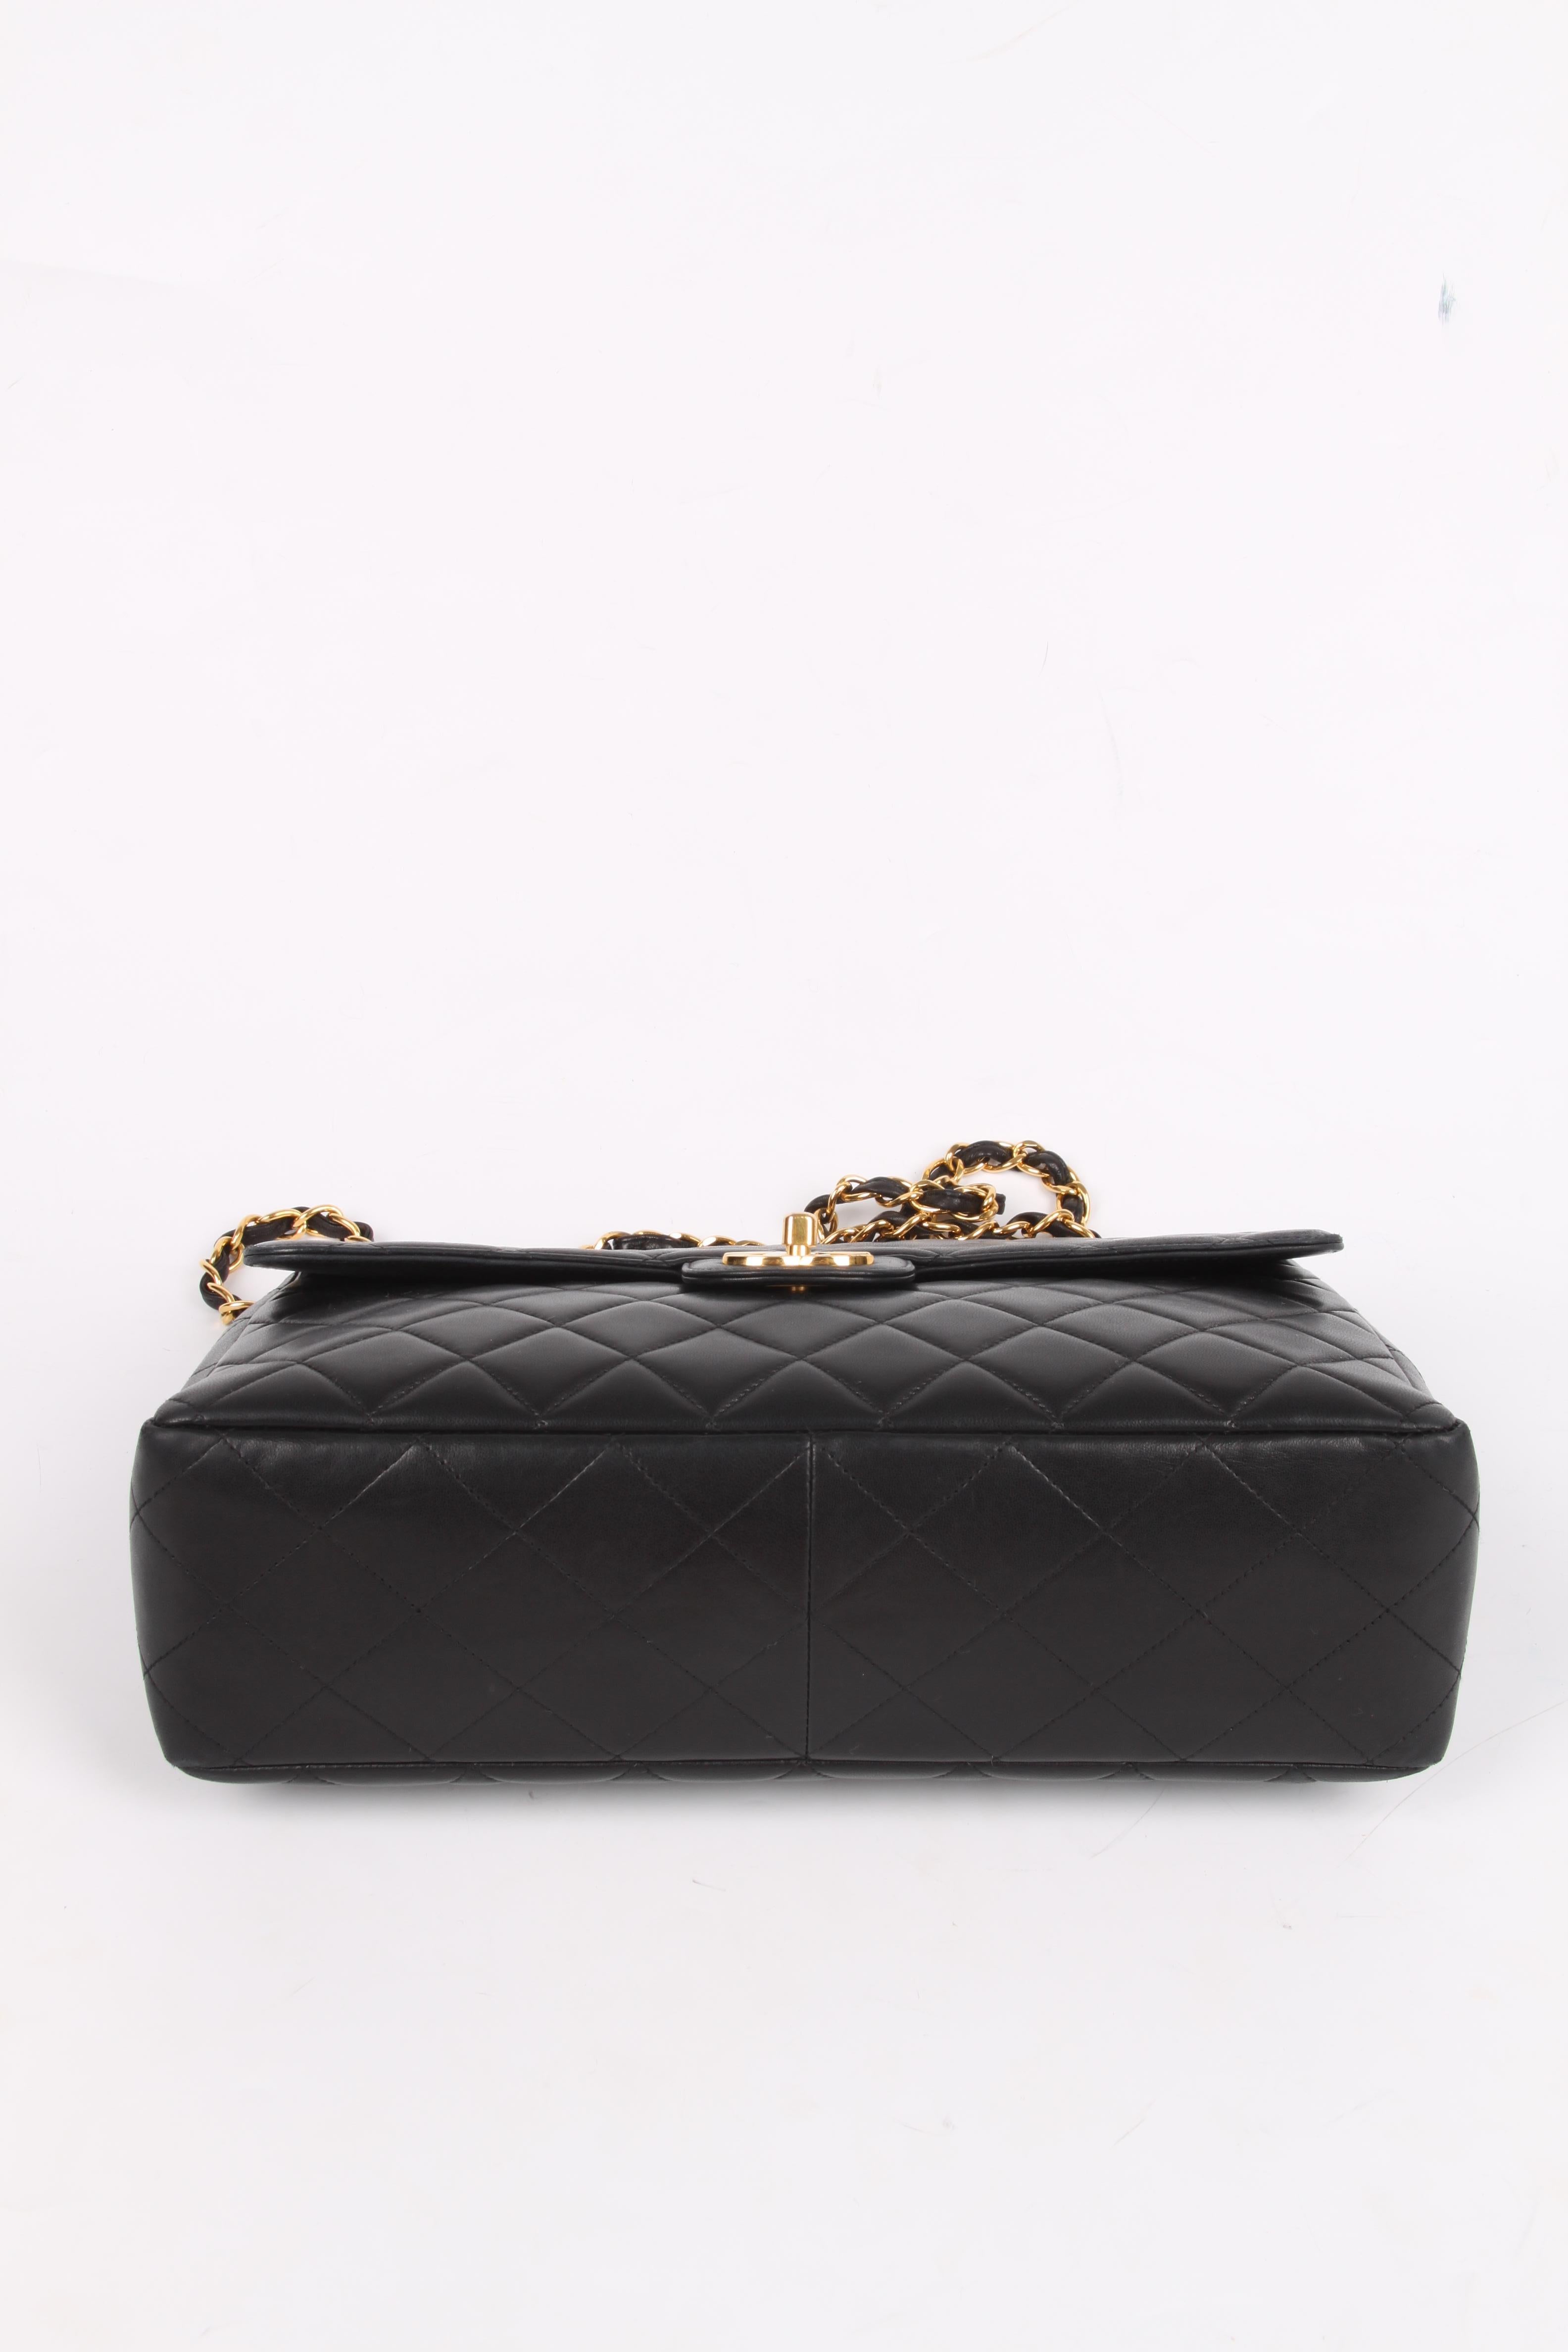 Women's or Men's Chanel Vintage Timeless Jumbo Single Flap Bag - black/gold For Sale